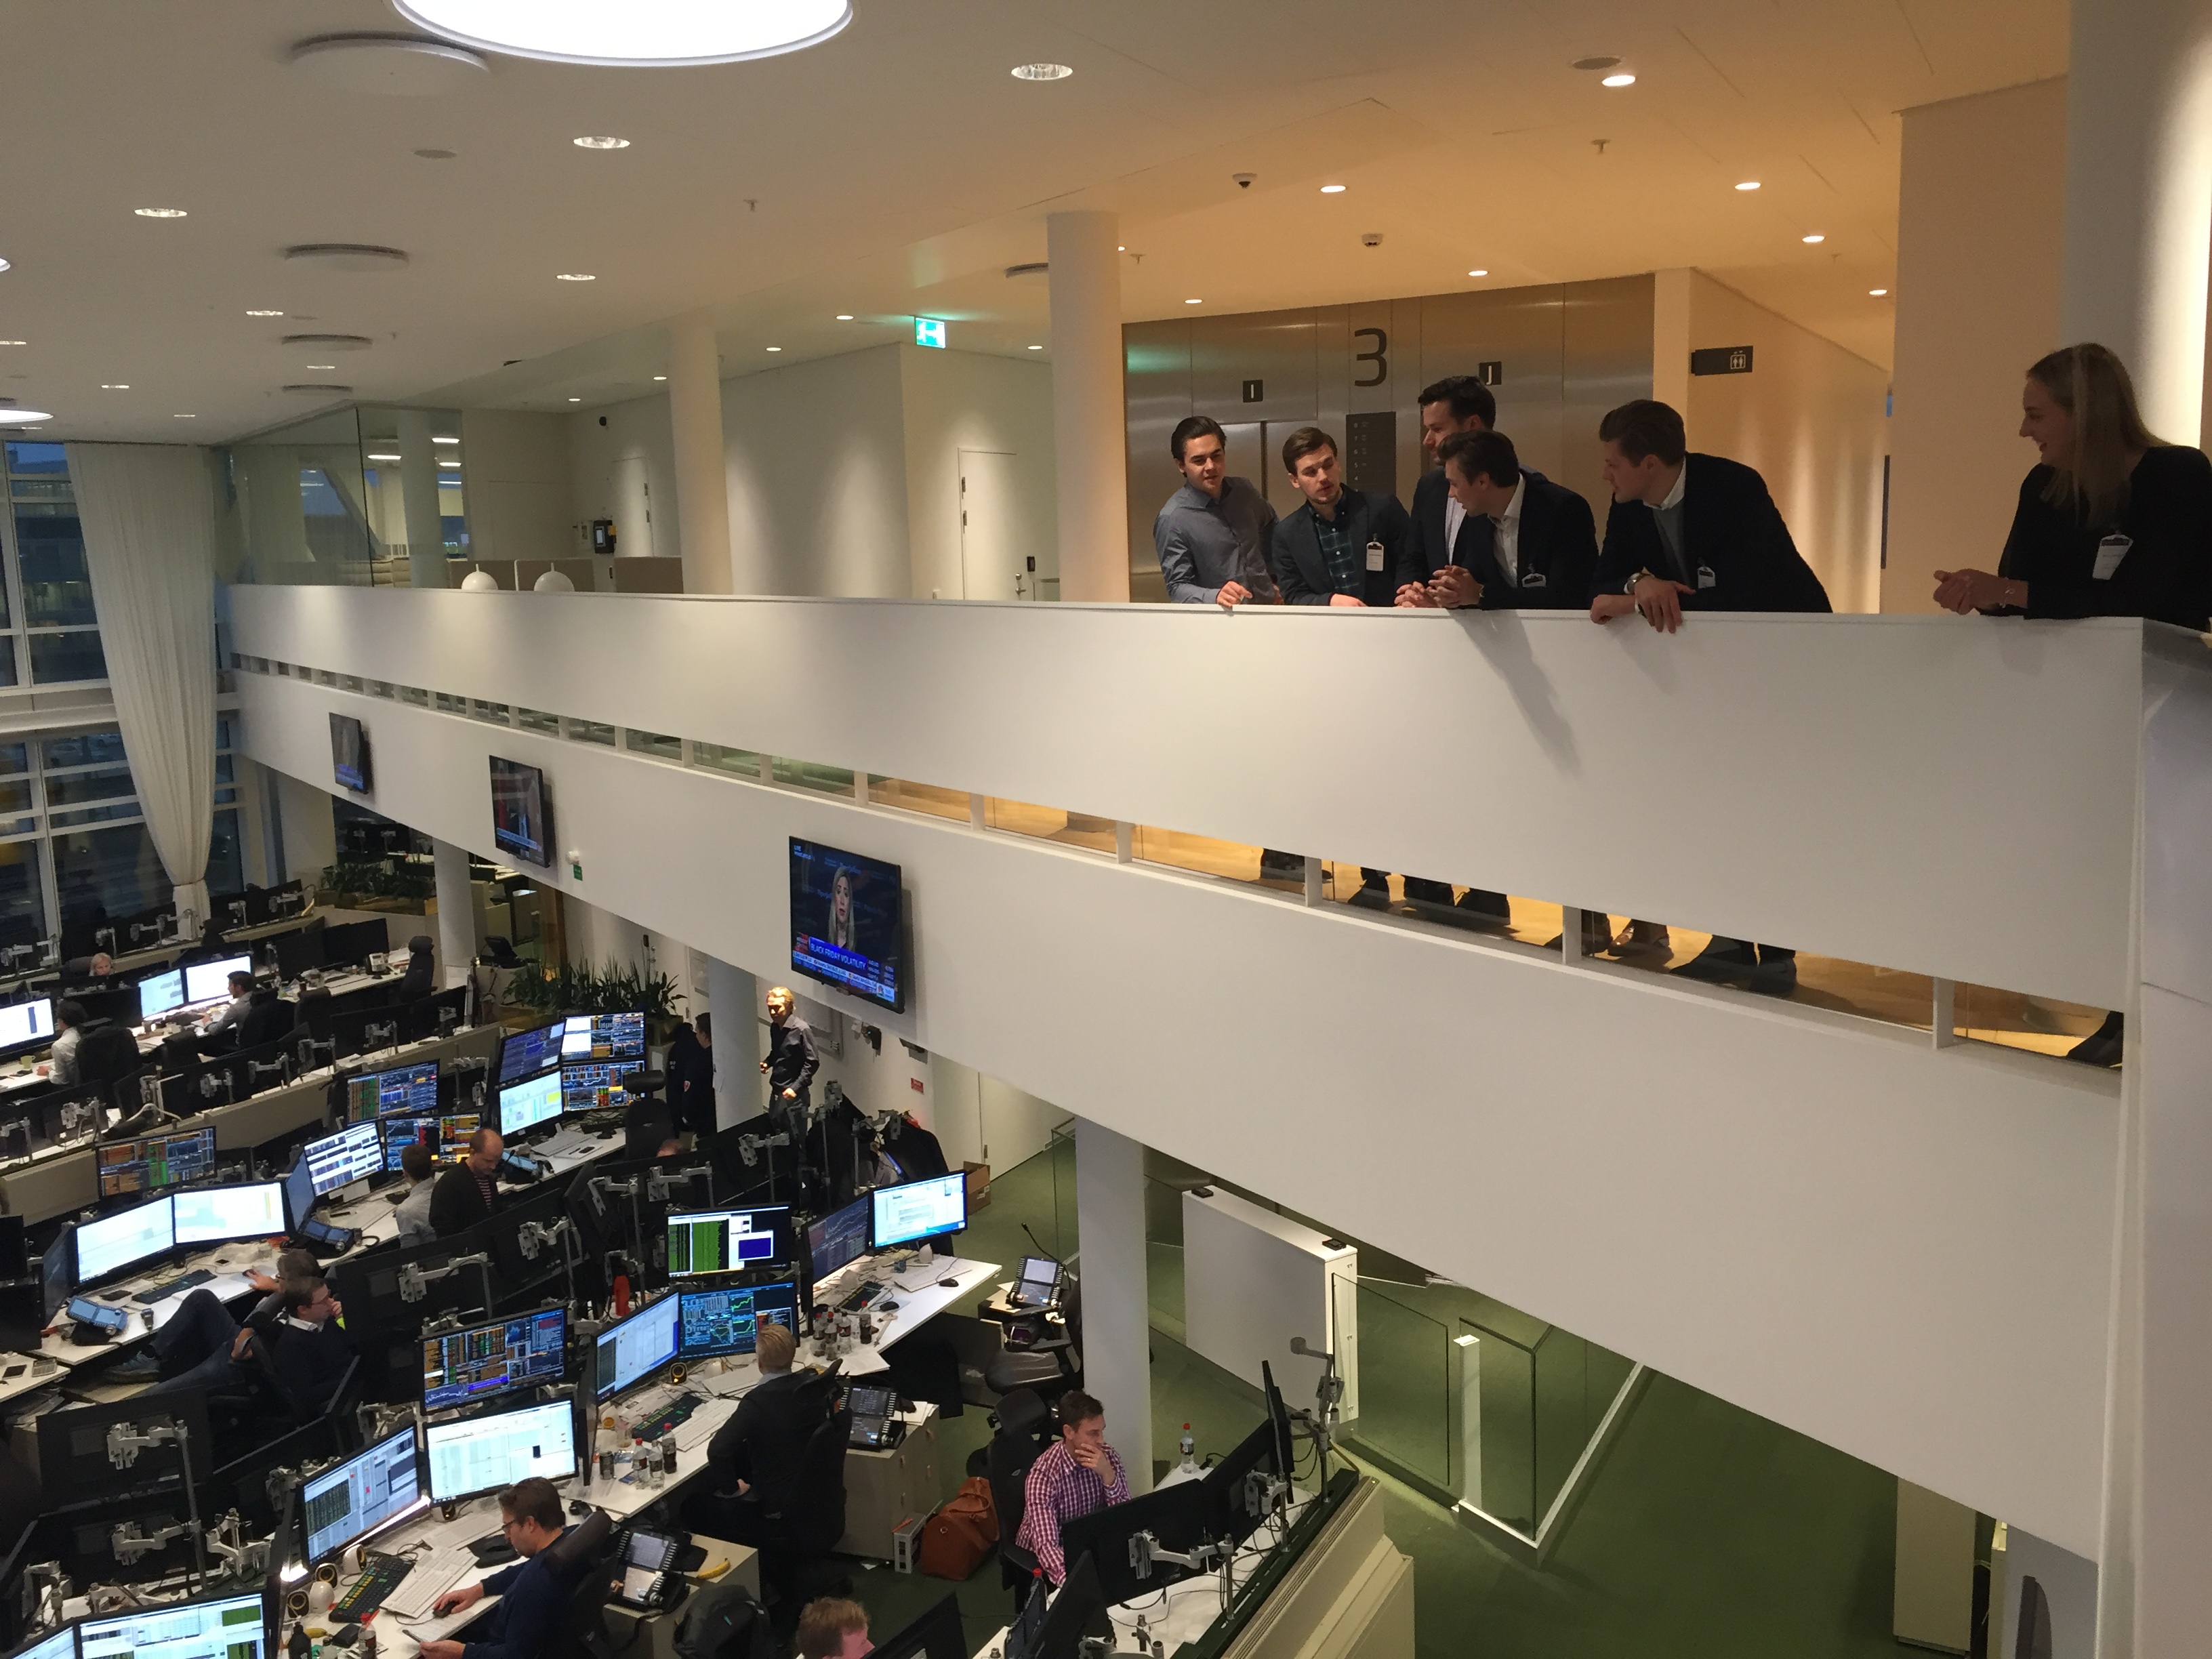 Students overlooking the Swedbank headquarters